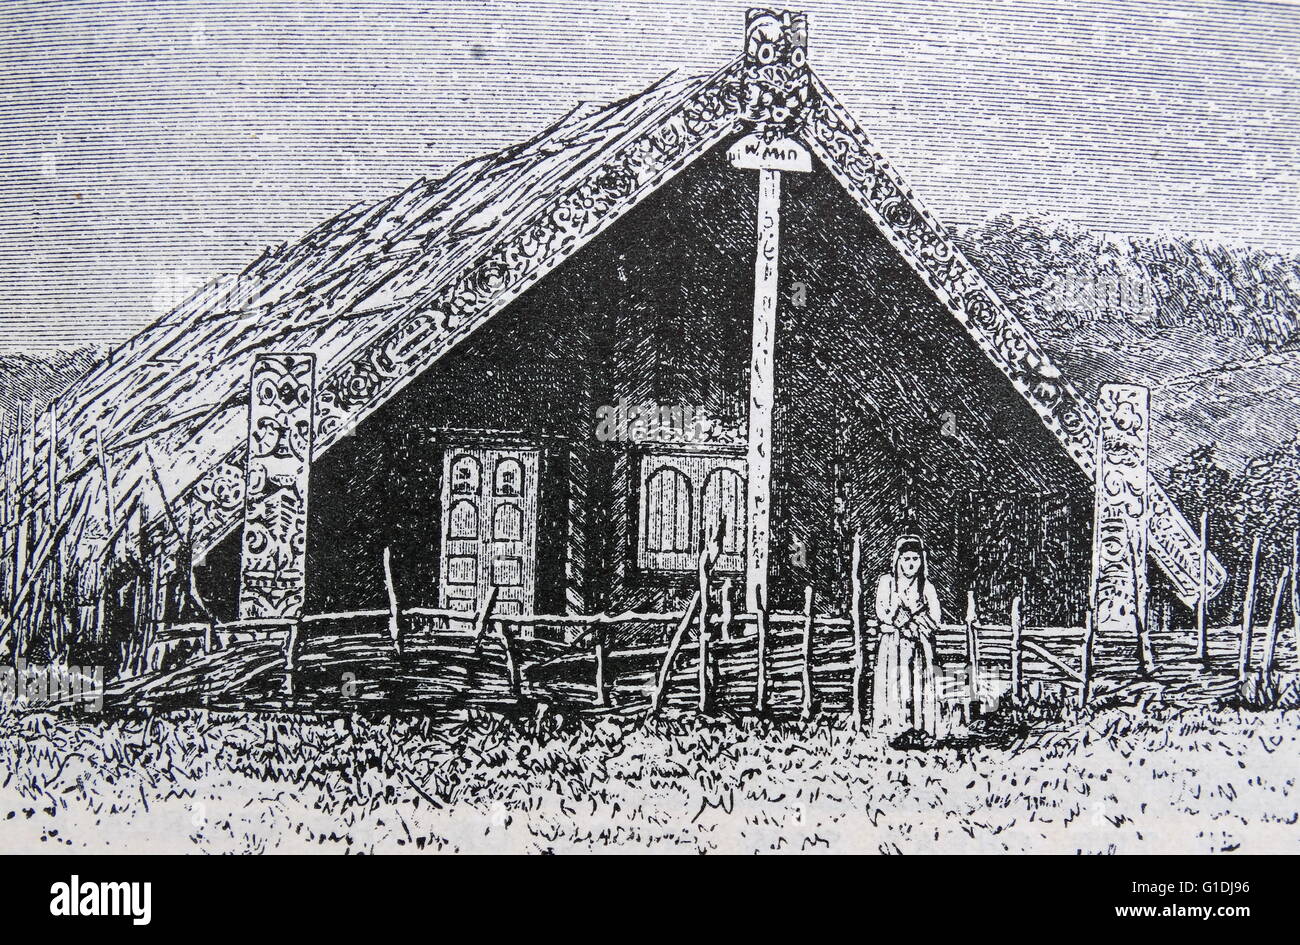 Traditionelle Maori Haus mit geschnitzten Rahmen, New Zealand 1850 Stockfoto